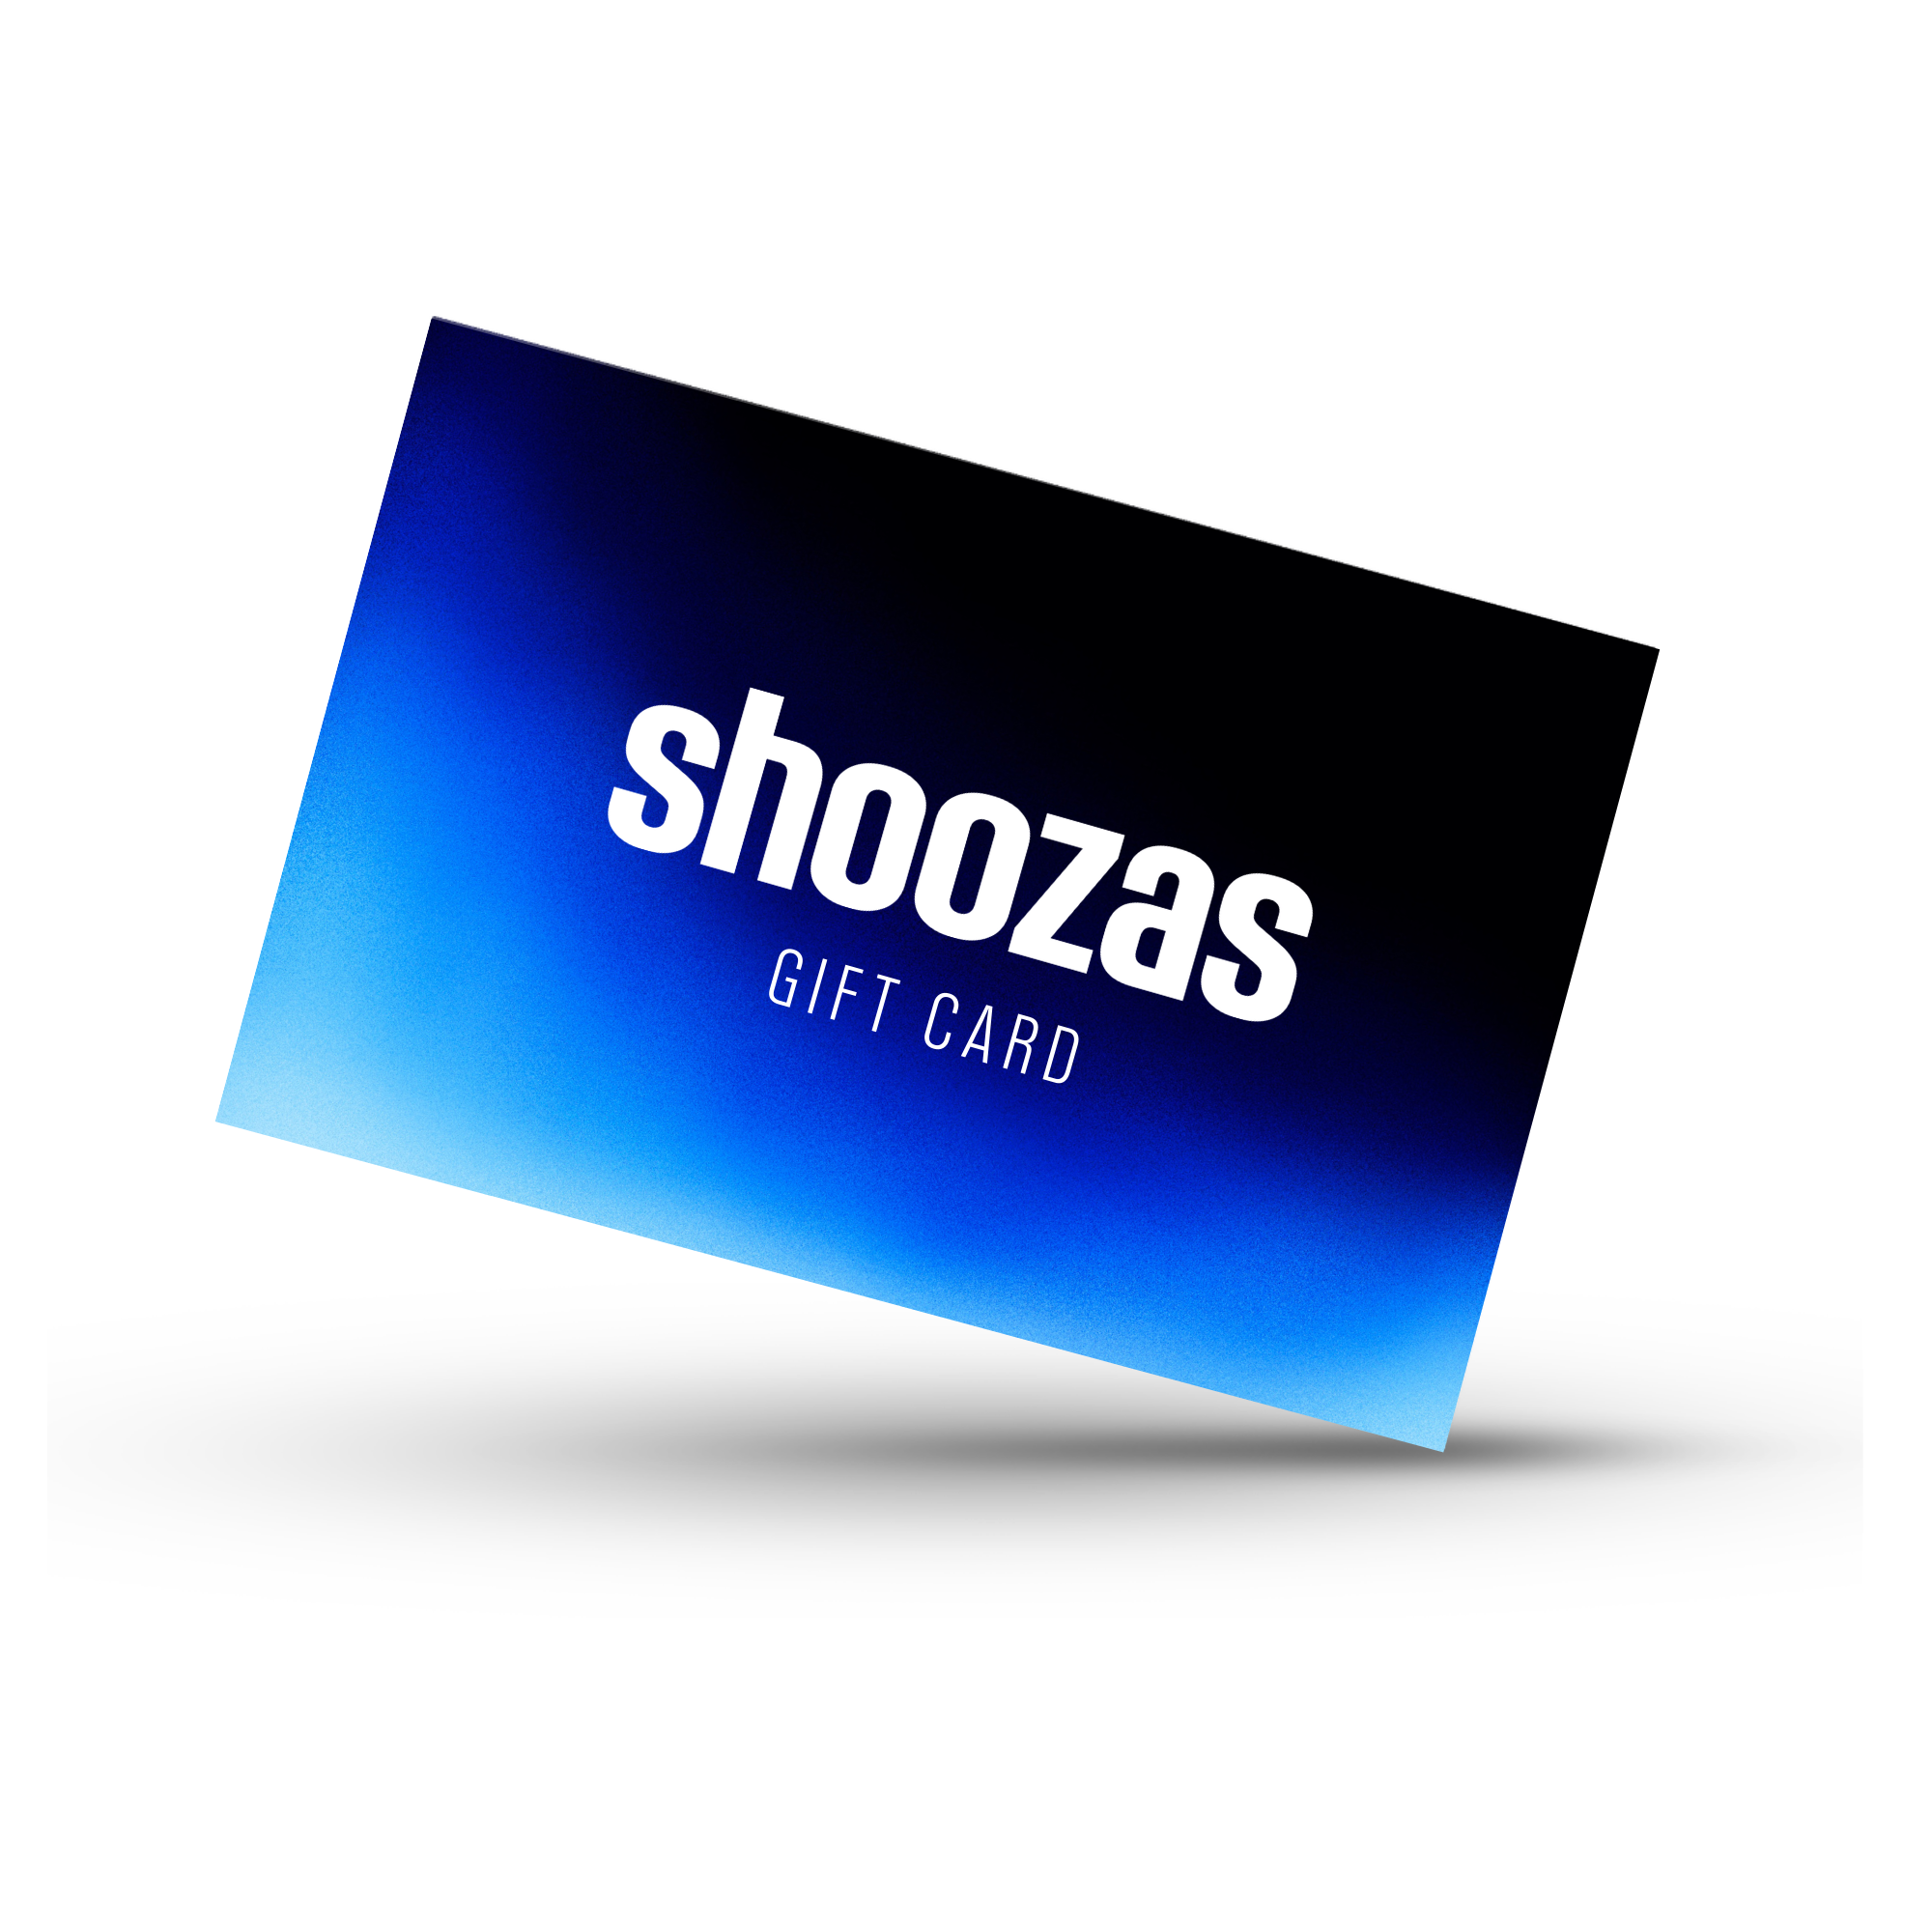 Shoozas Gift Card